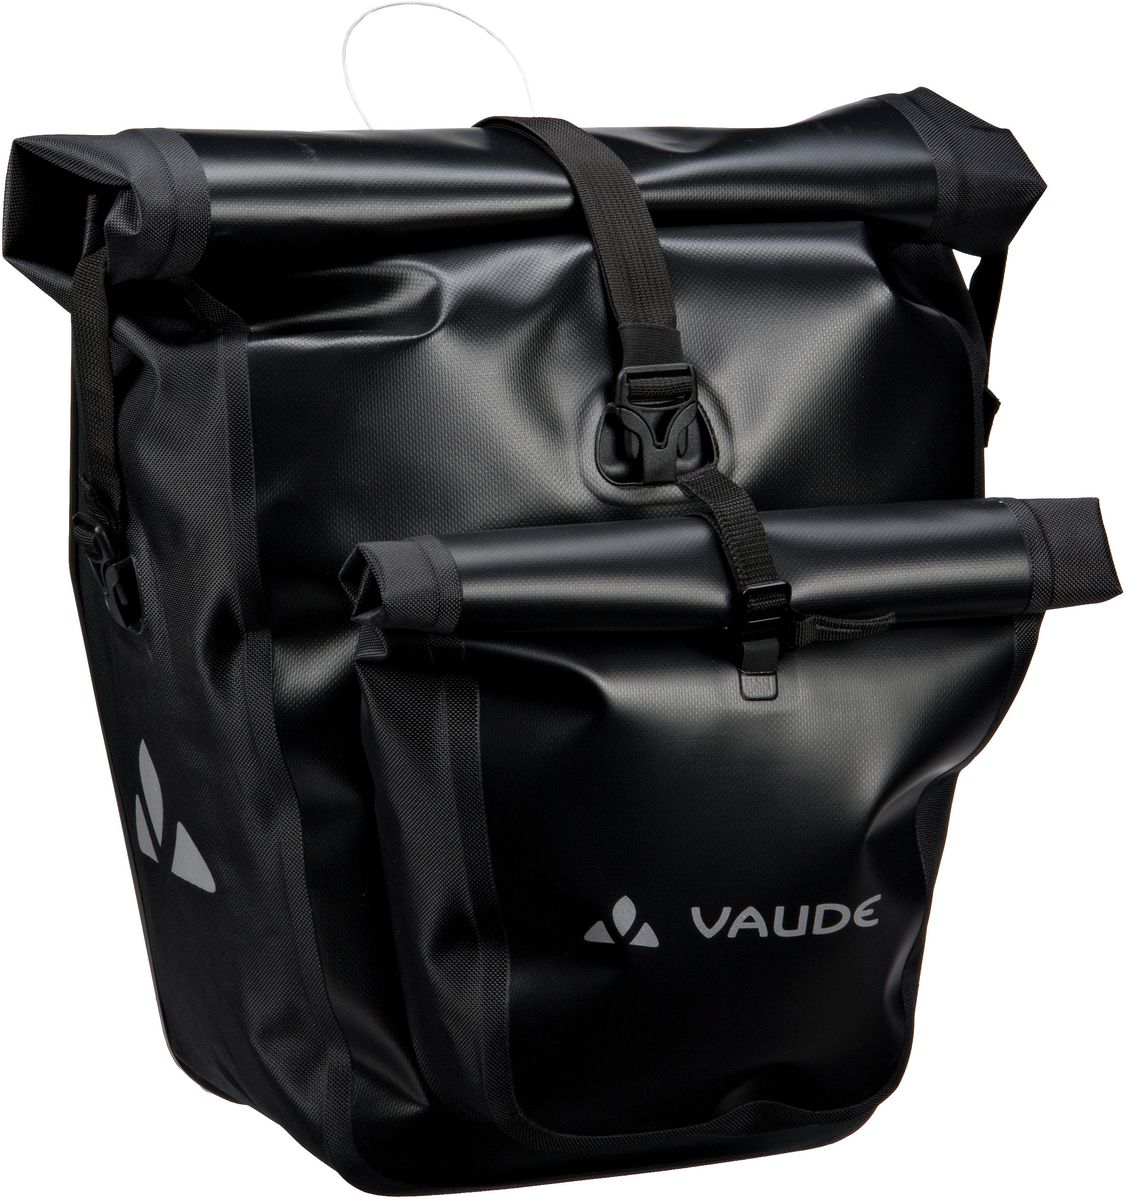 Vaude Aqua Back Plus Preisvergleich Fahrradtasche